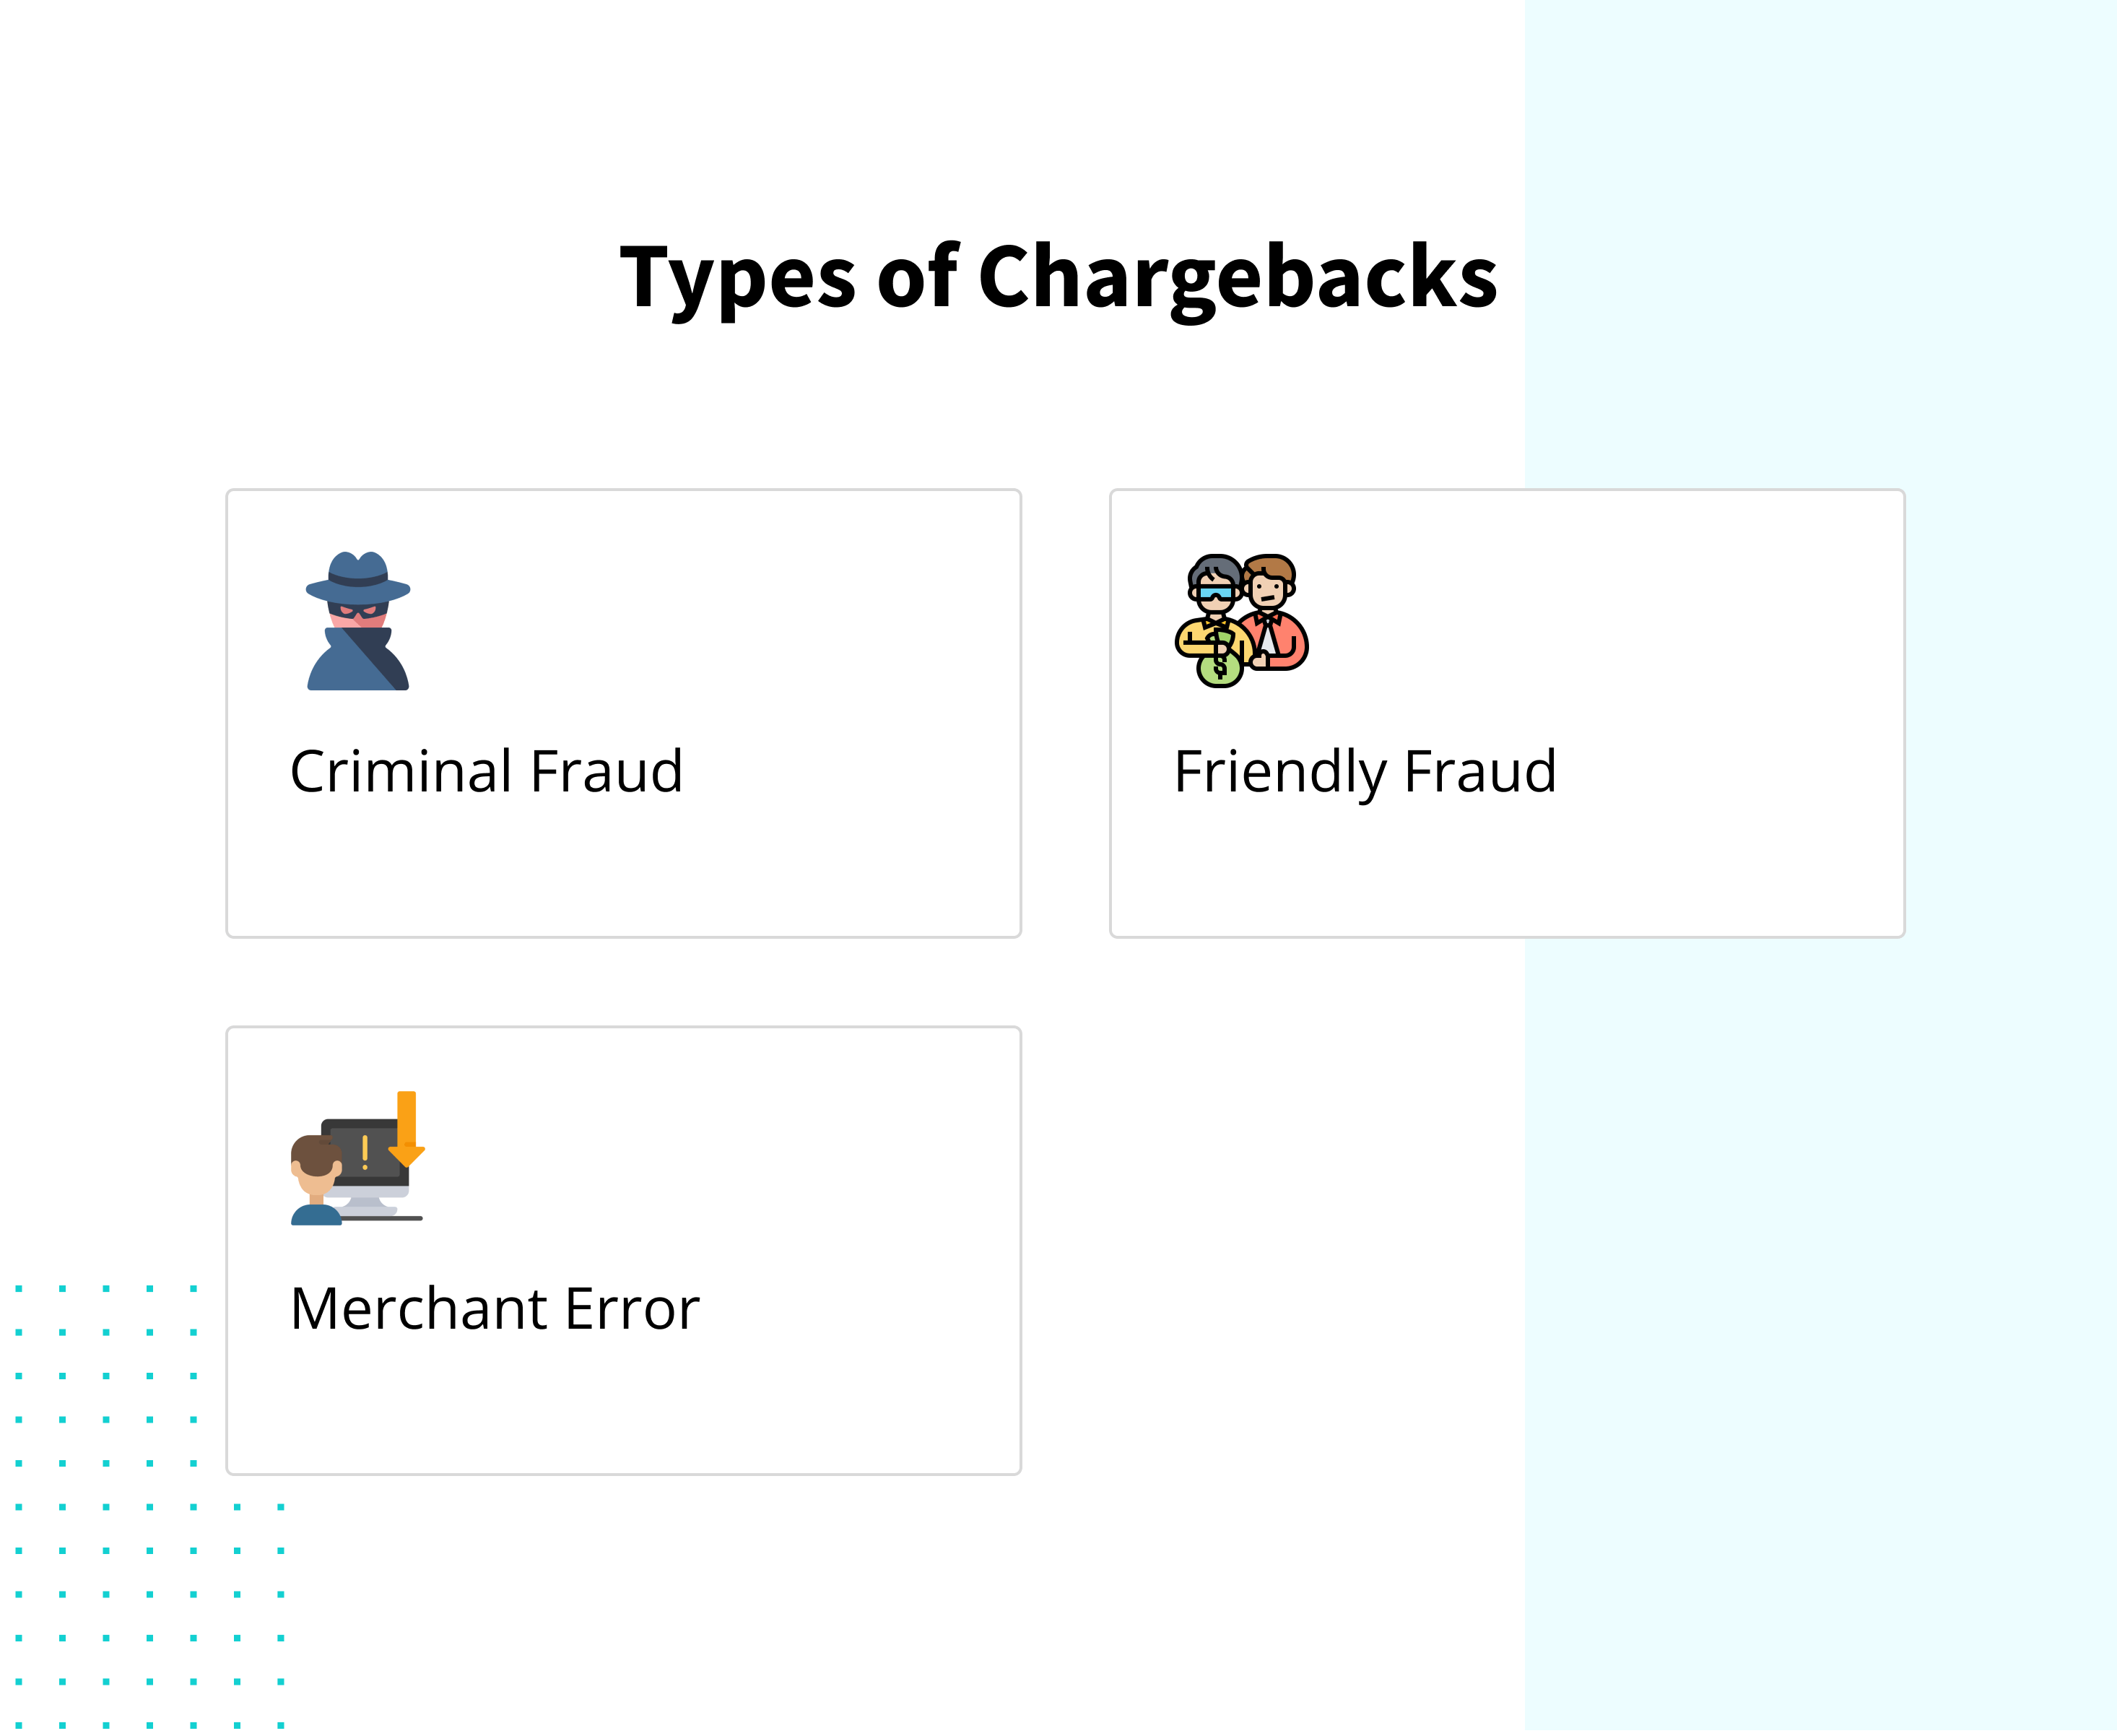 Types of Chargebacks